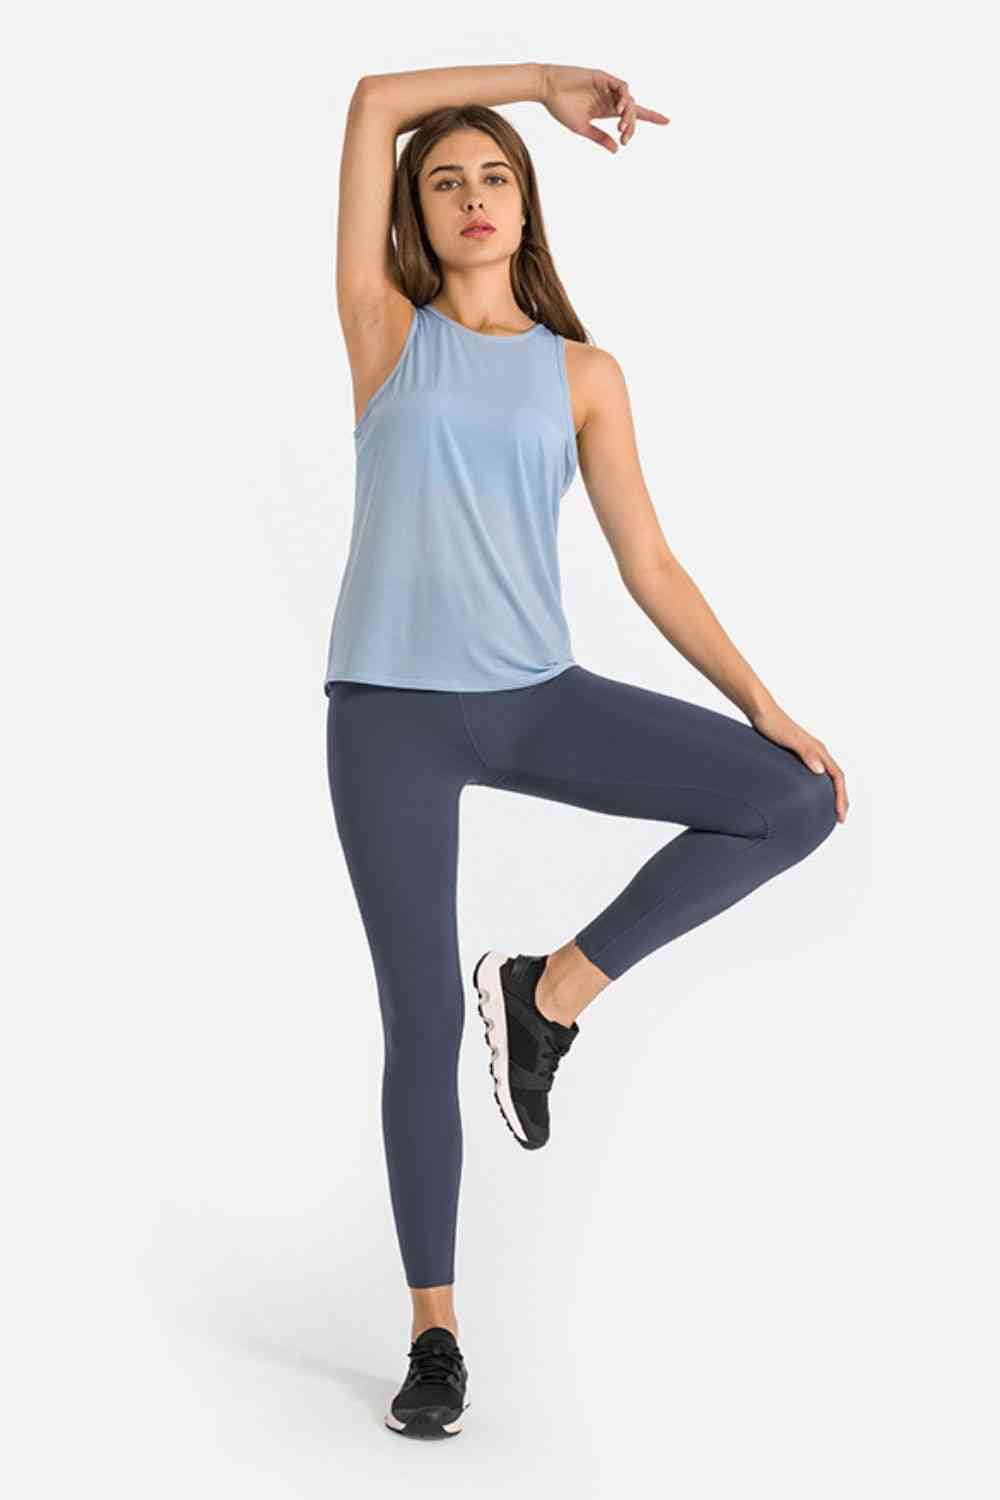 The802Gypsy Activewear GYPSY-High Waist Ankle-Length Yoga Leggings